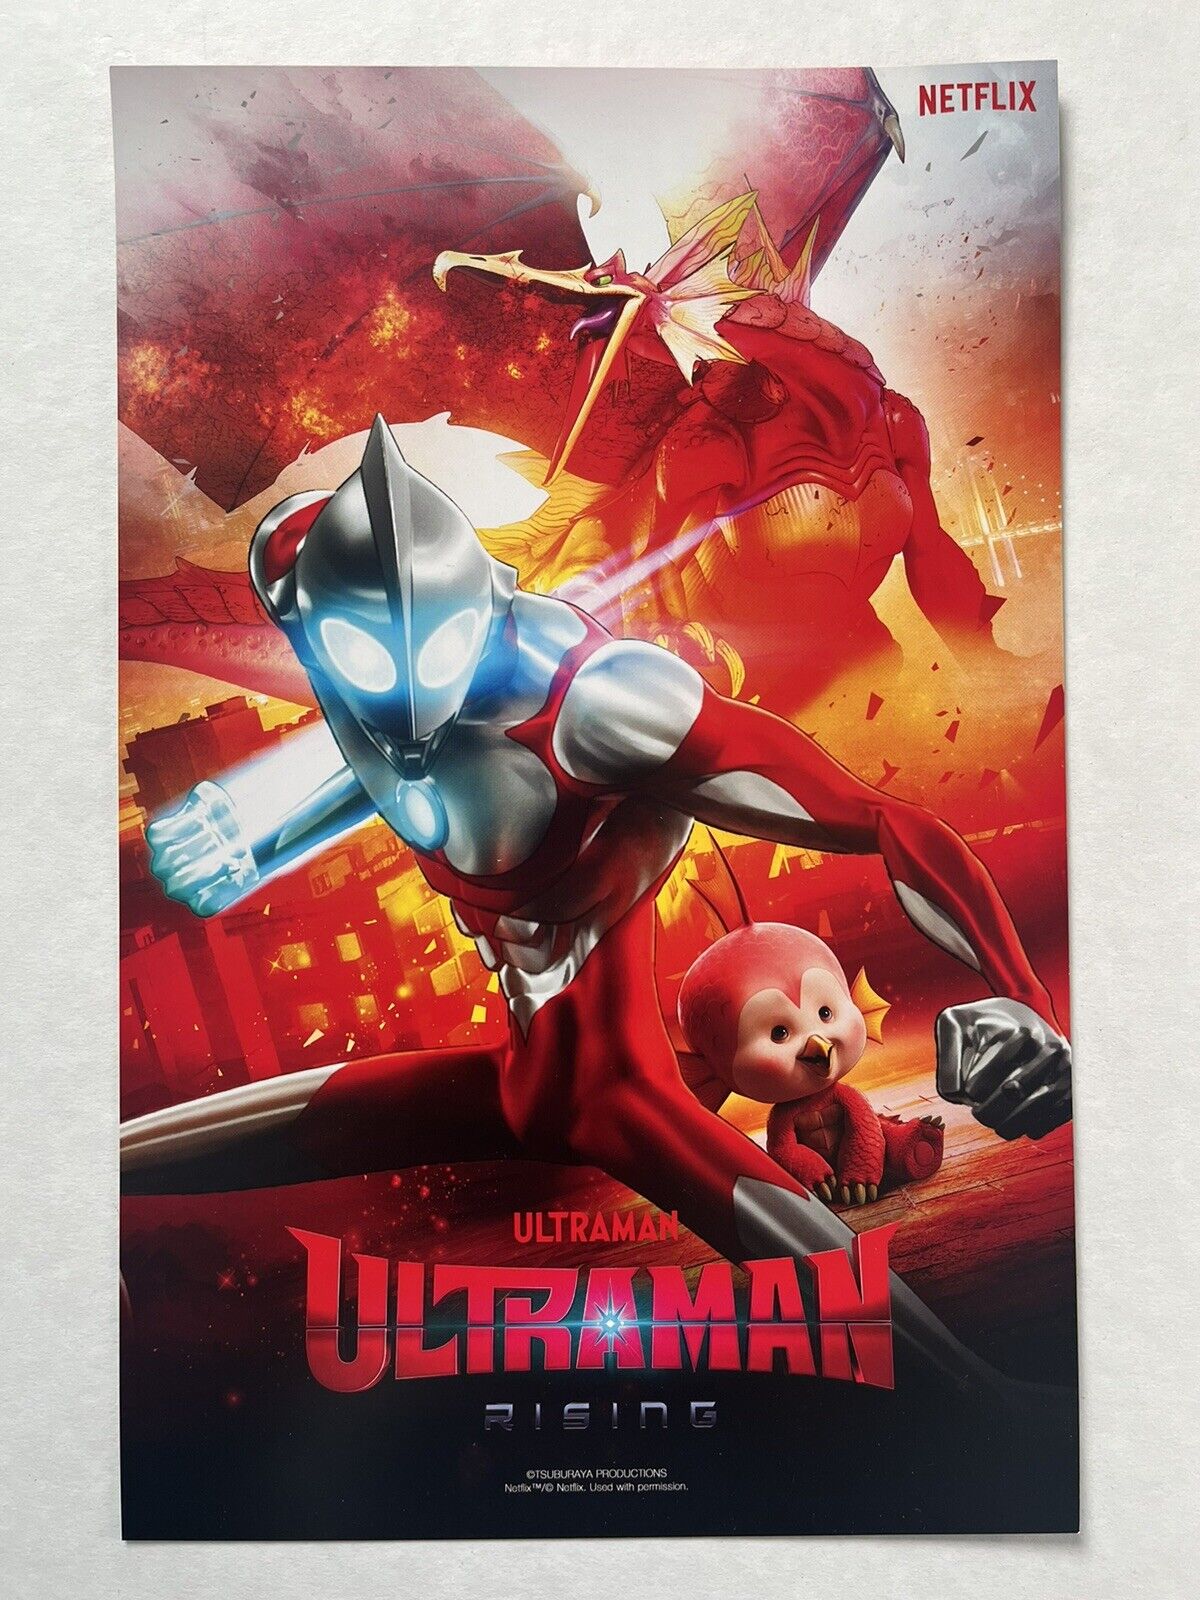 Ultraman Rising Netflix Poster Size: 6 1/8 x 10 1/8 Ultramega Godzilla Voltron